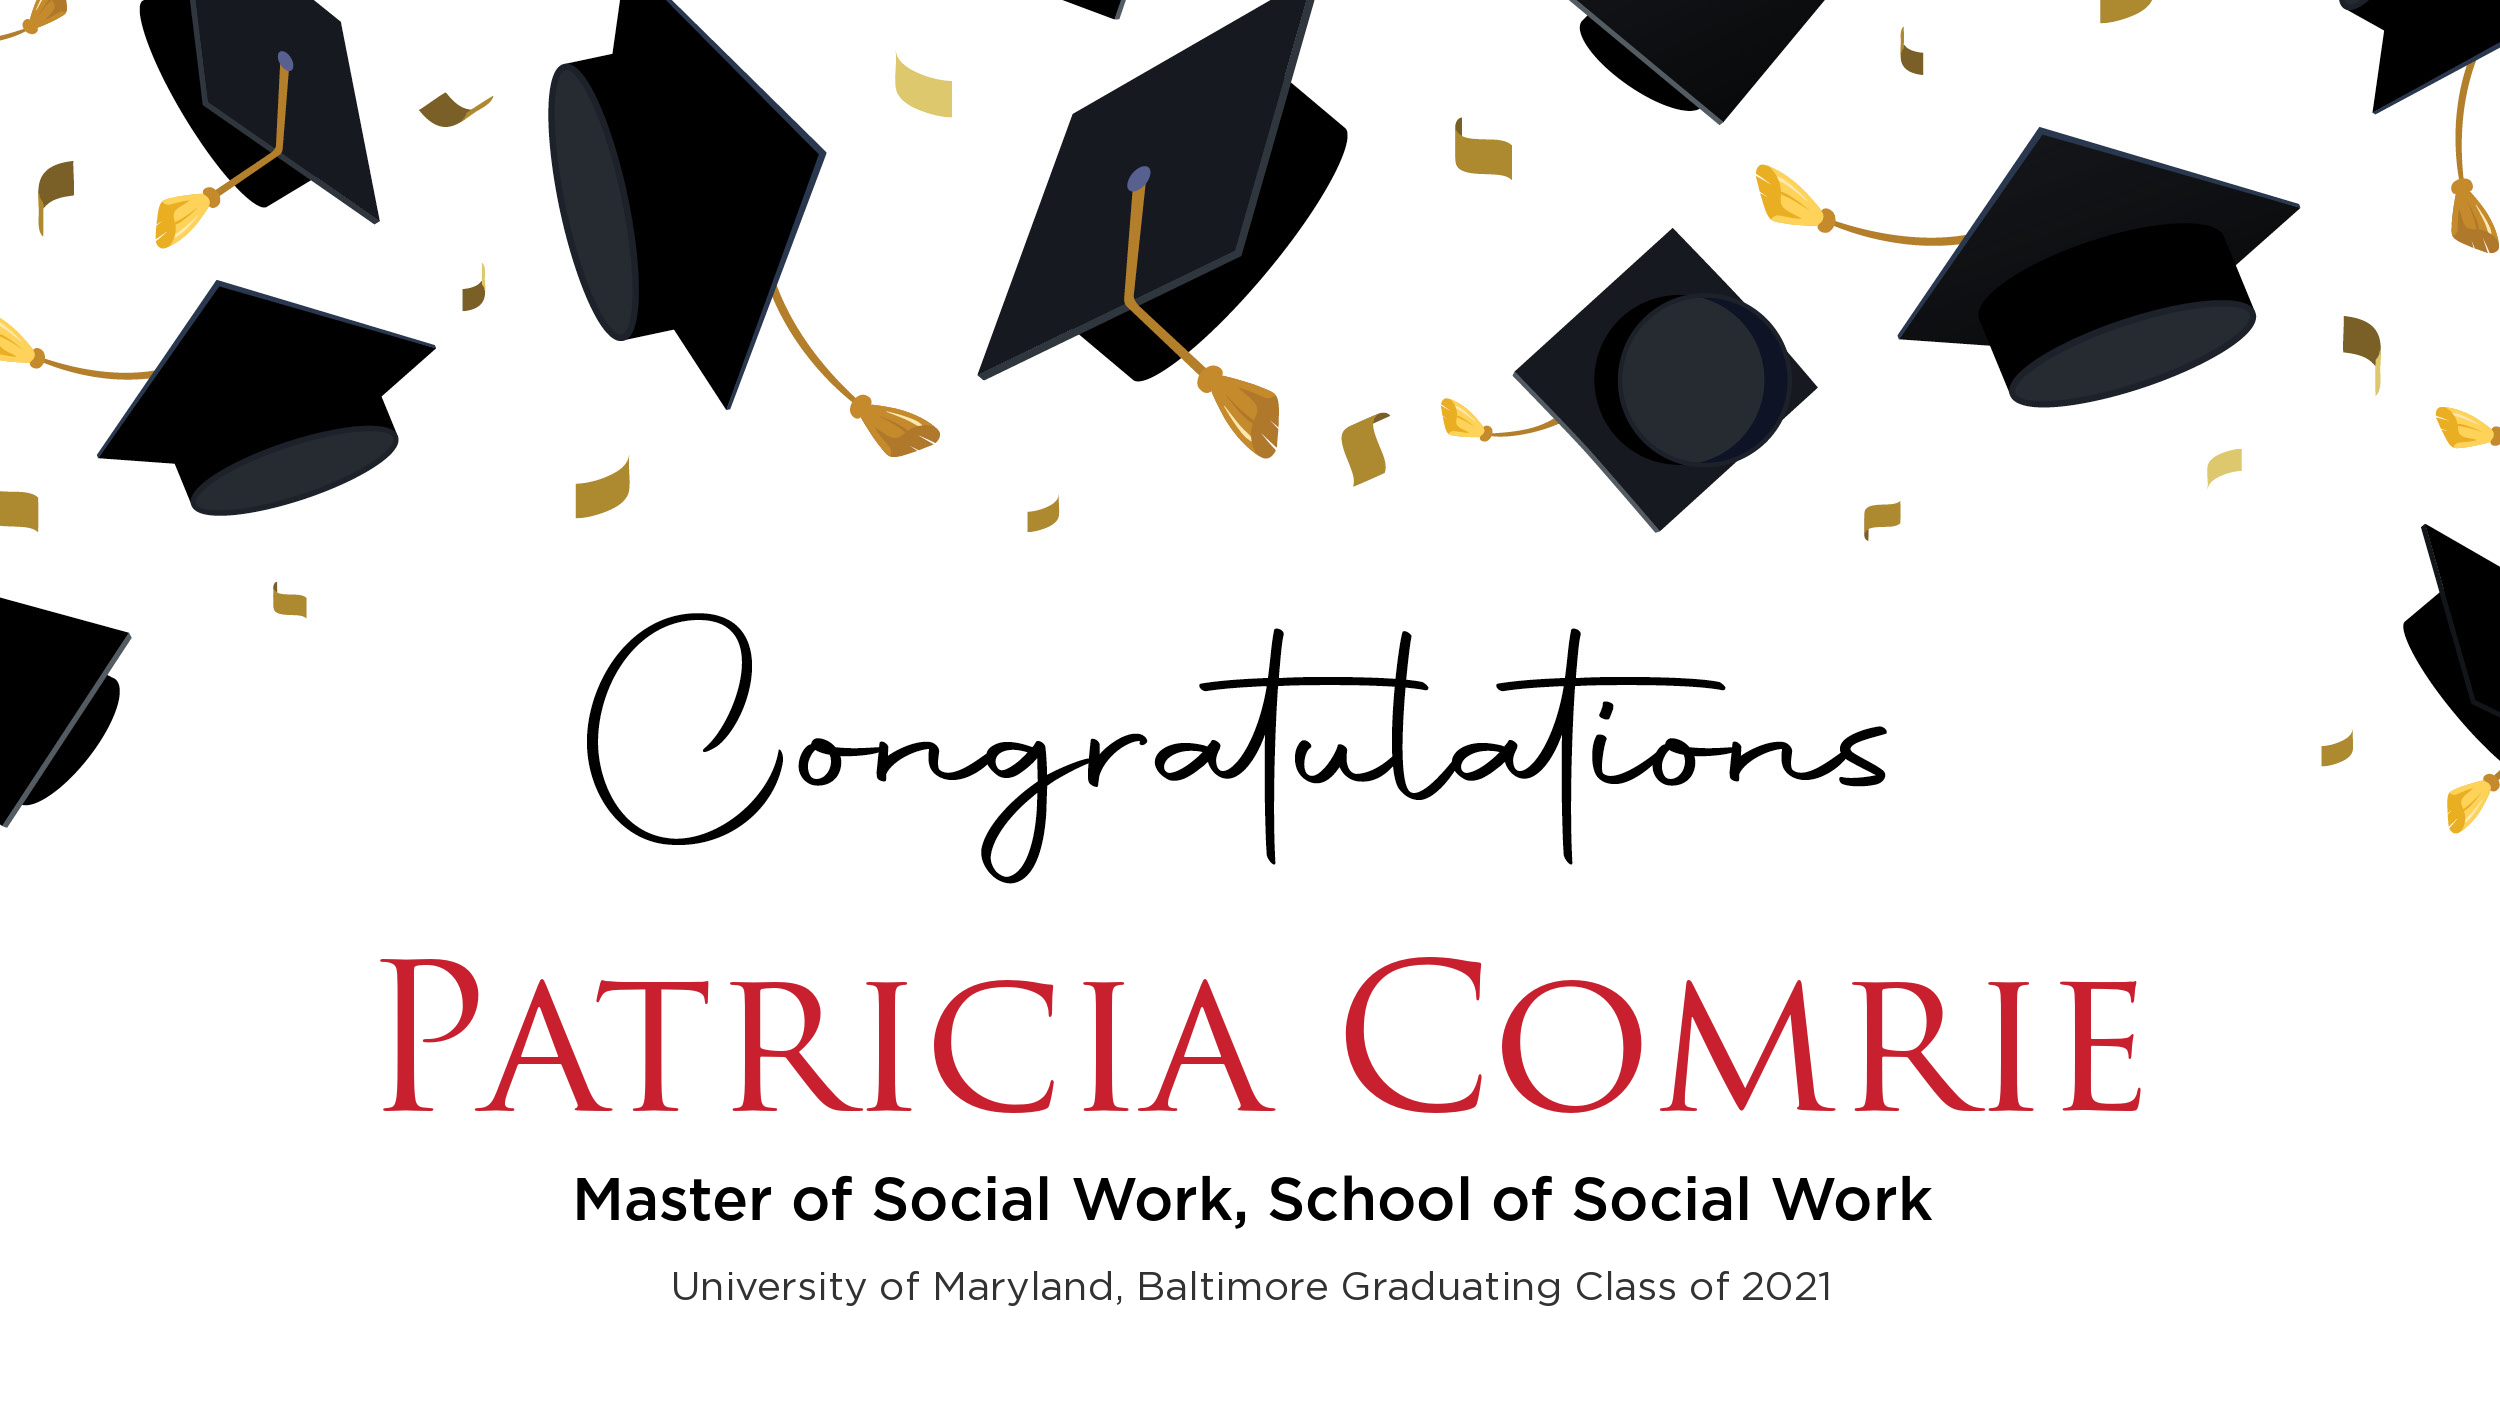 Congratulations Patricia Comrie, Master of Social Work